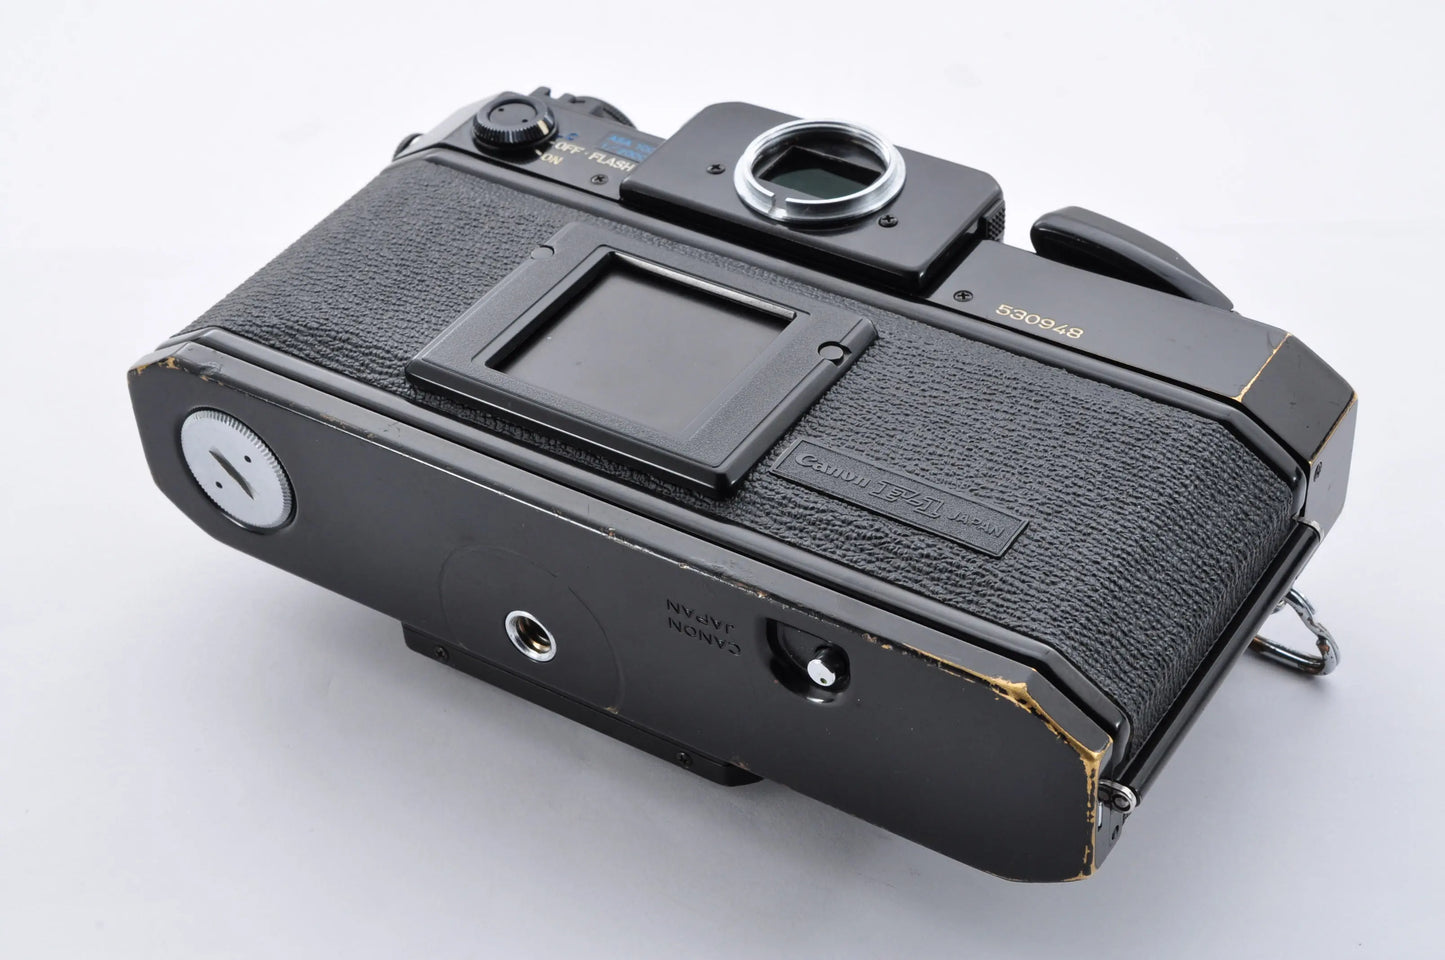 Canon F-1 Late model SLR 35mm Film Camera FD 50mm f/1.4 S.S.C. SSC "O" Fm Jp #530948